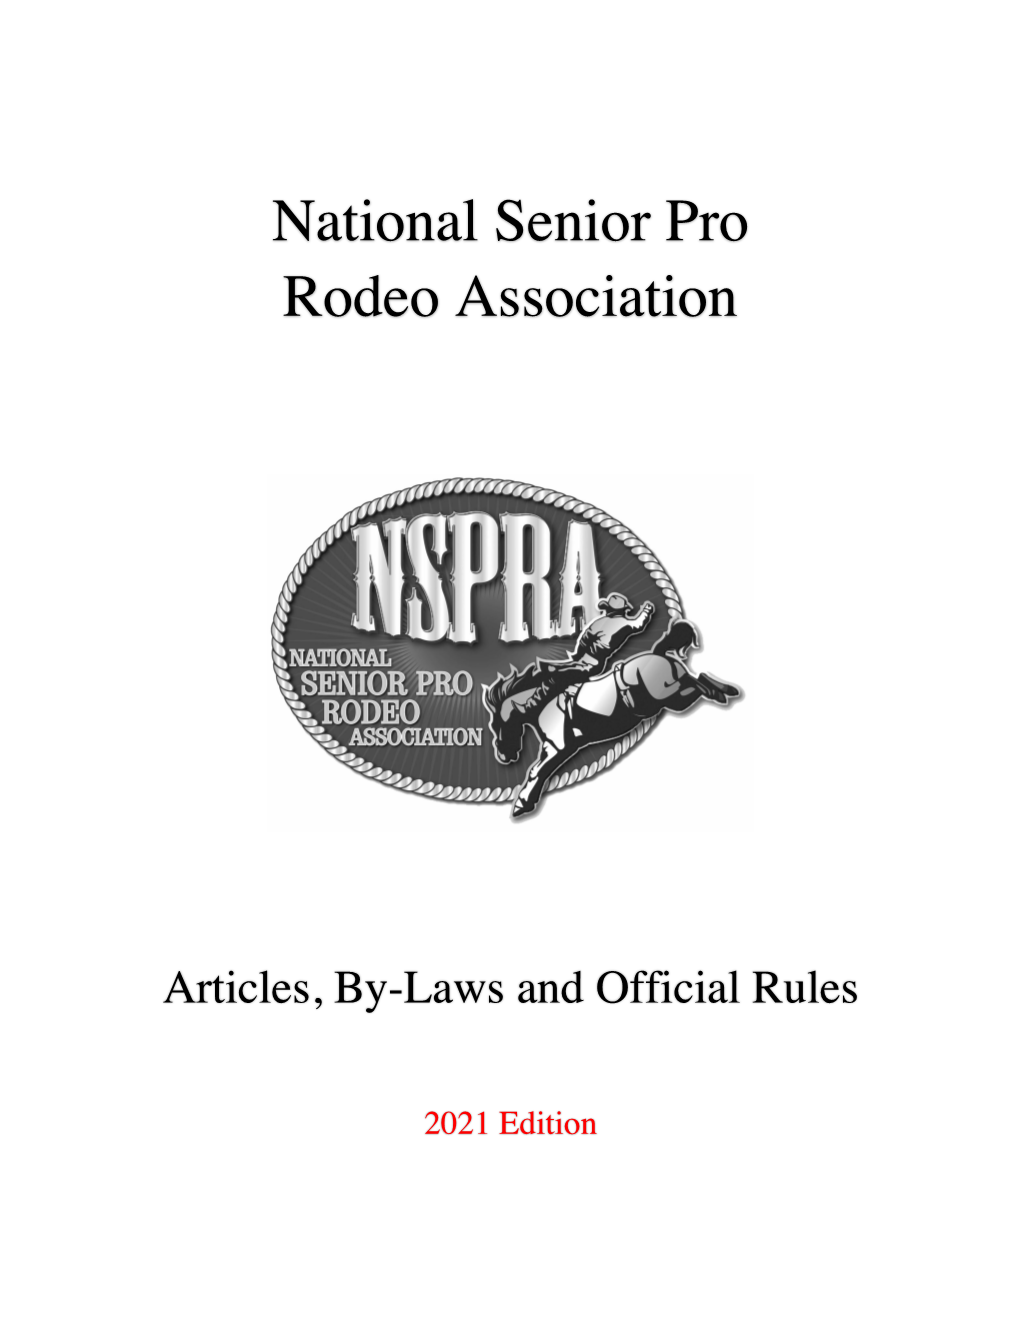 National Senior Pro Rodeo Association